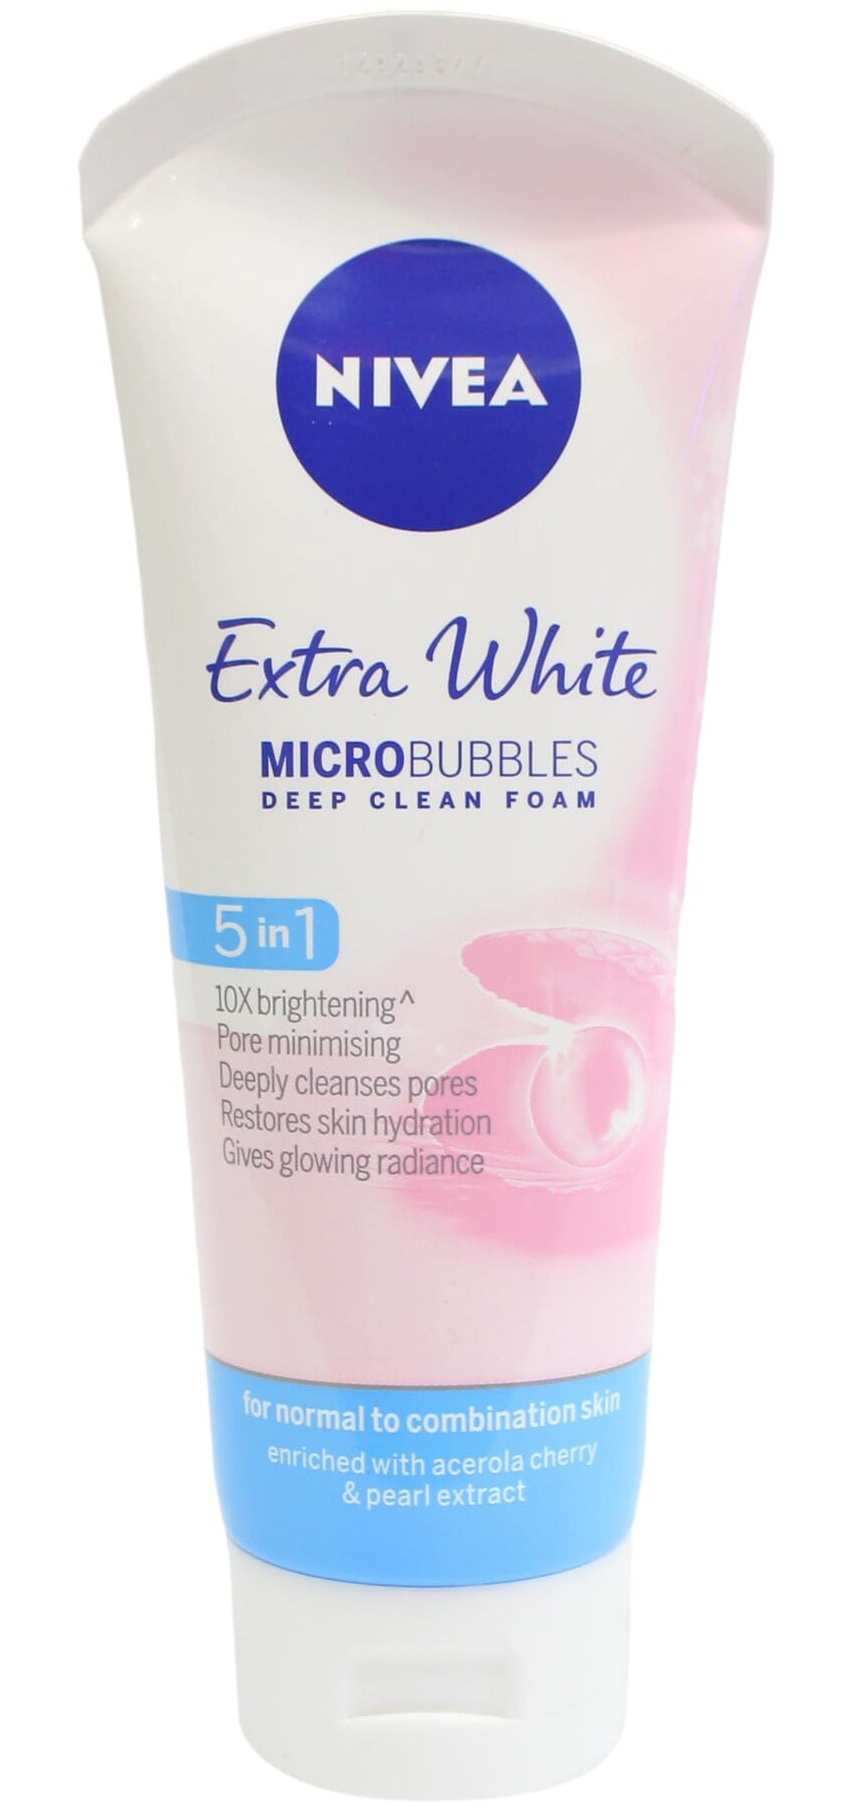 Nivea Extra White Microbubbles Deep Clean Foam